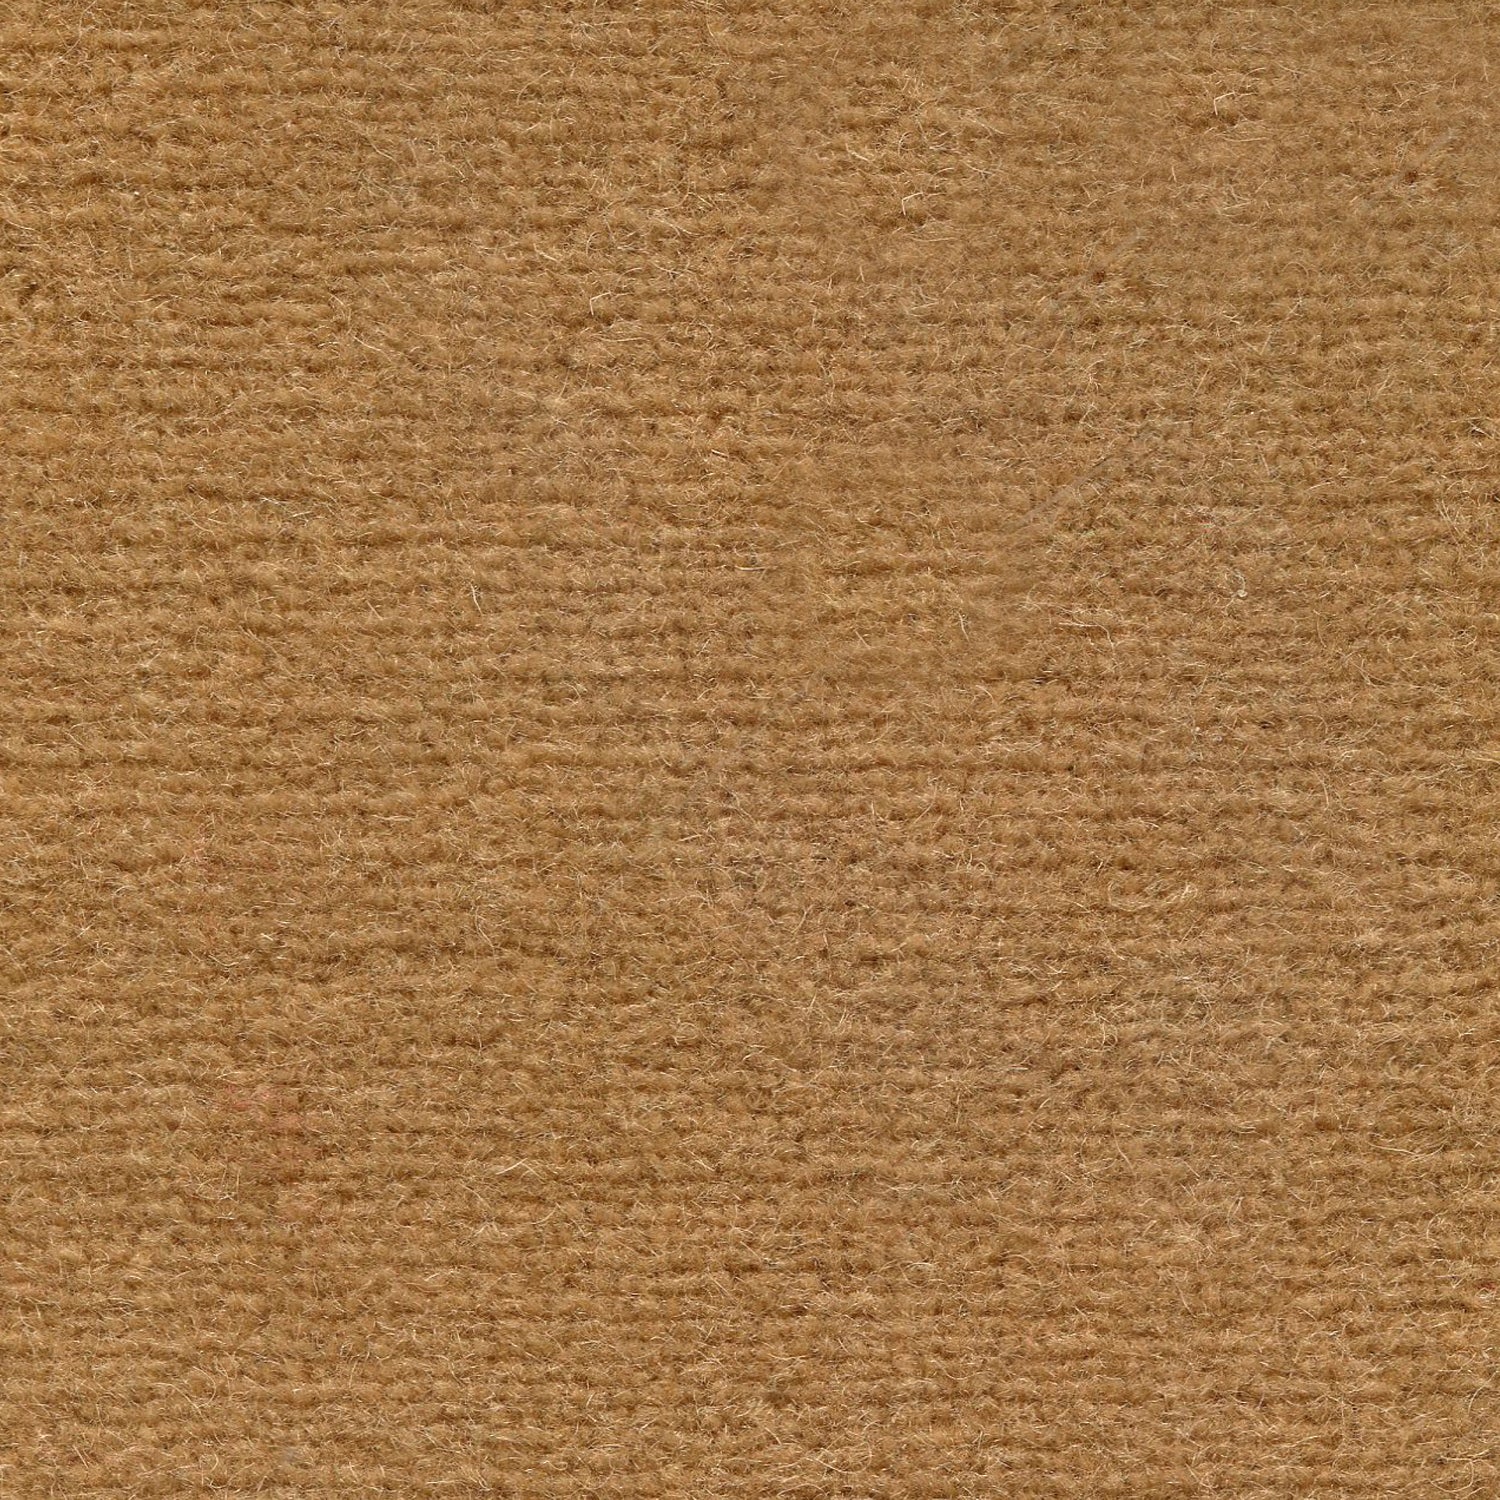 Wool broadloom carpet swatch in a high-pile weave in a solid tan colorway.